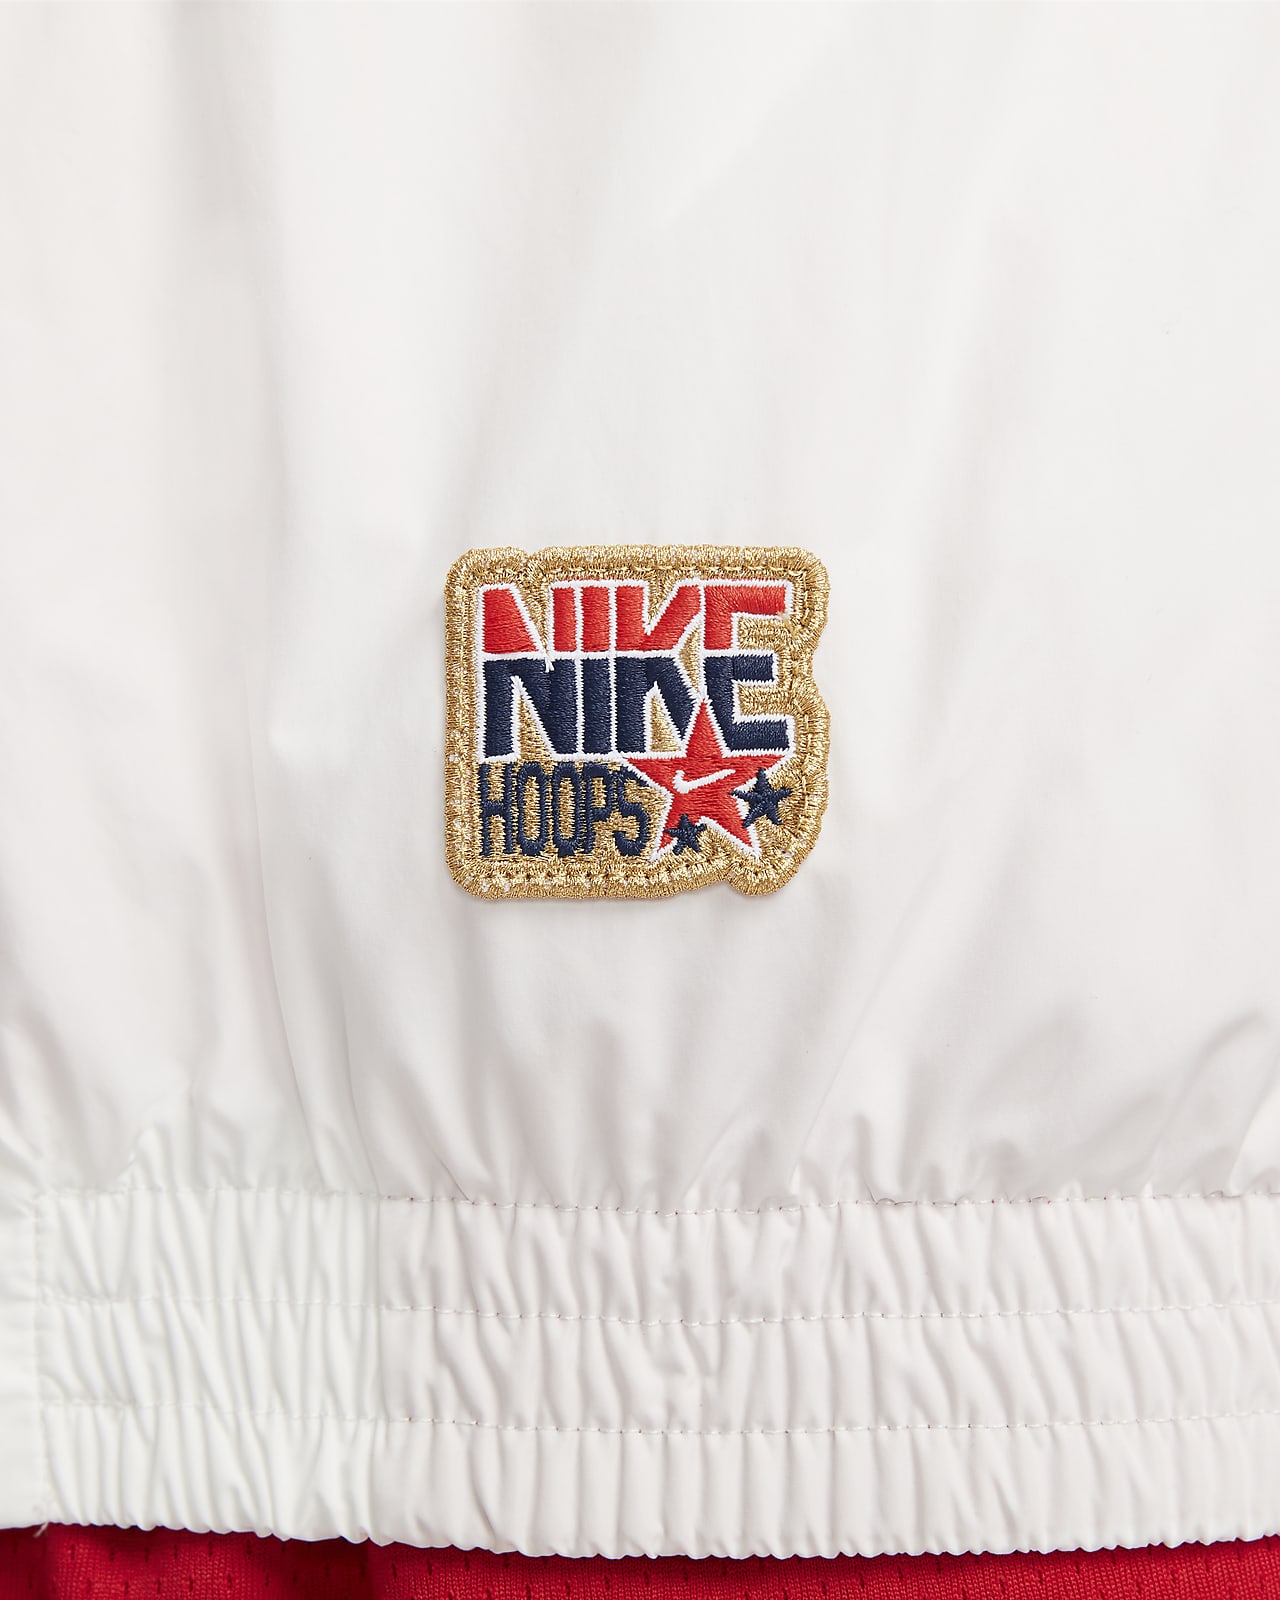 Nike Authentics Men's Warm-Up Shirt.